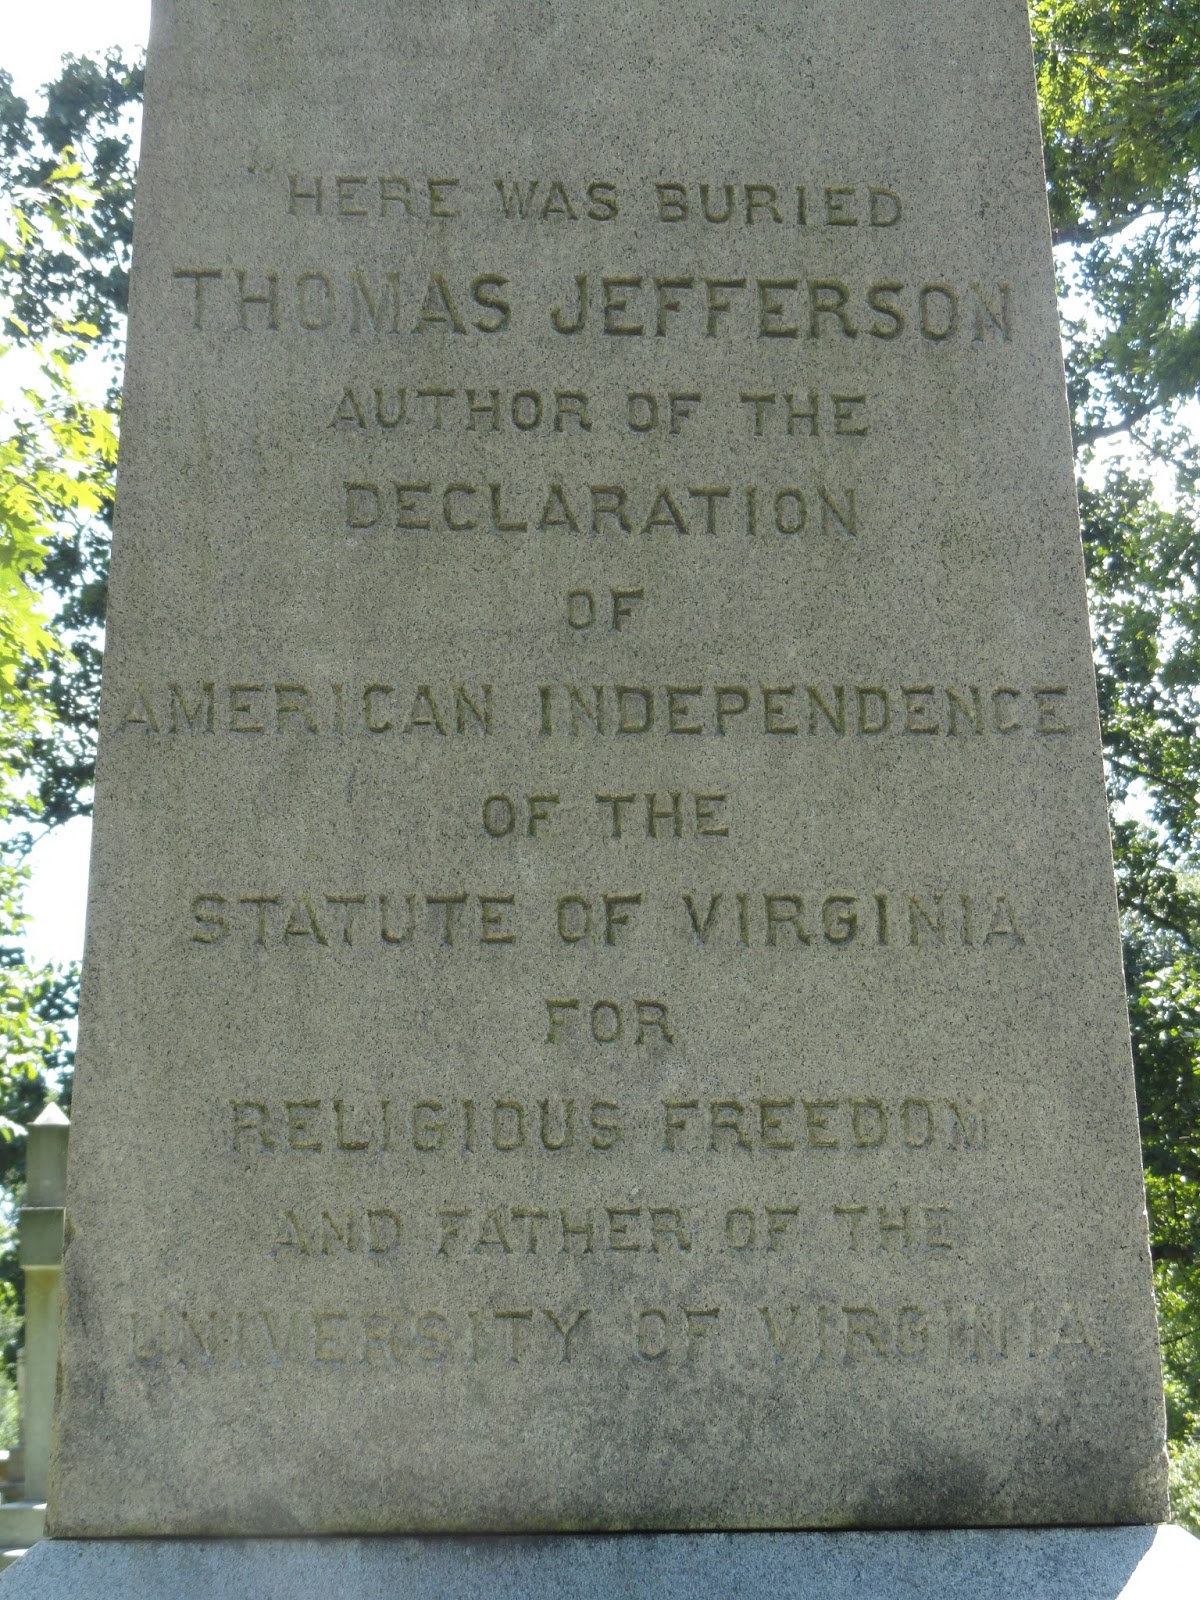 Dr Tsai S Blog Thomas Jefferson Father Of The University Of Virginia